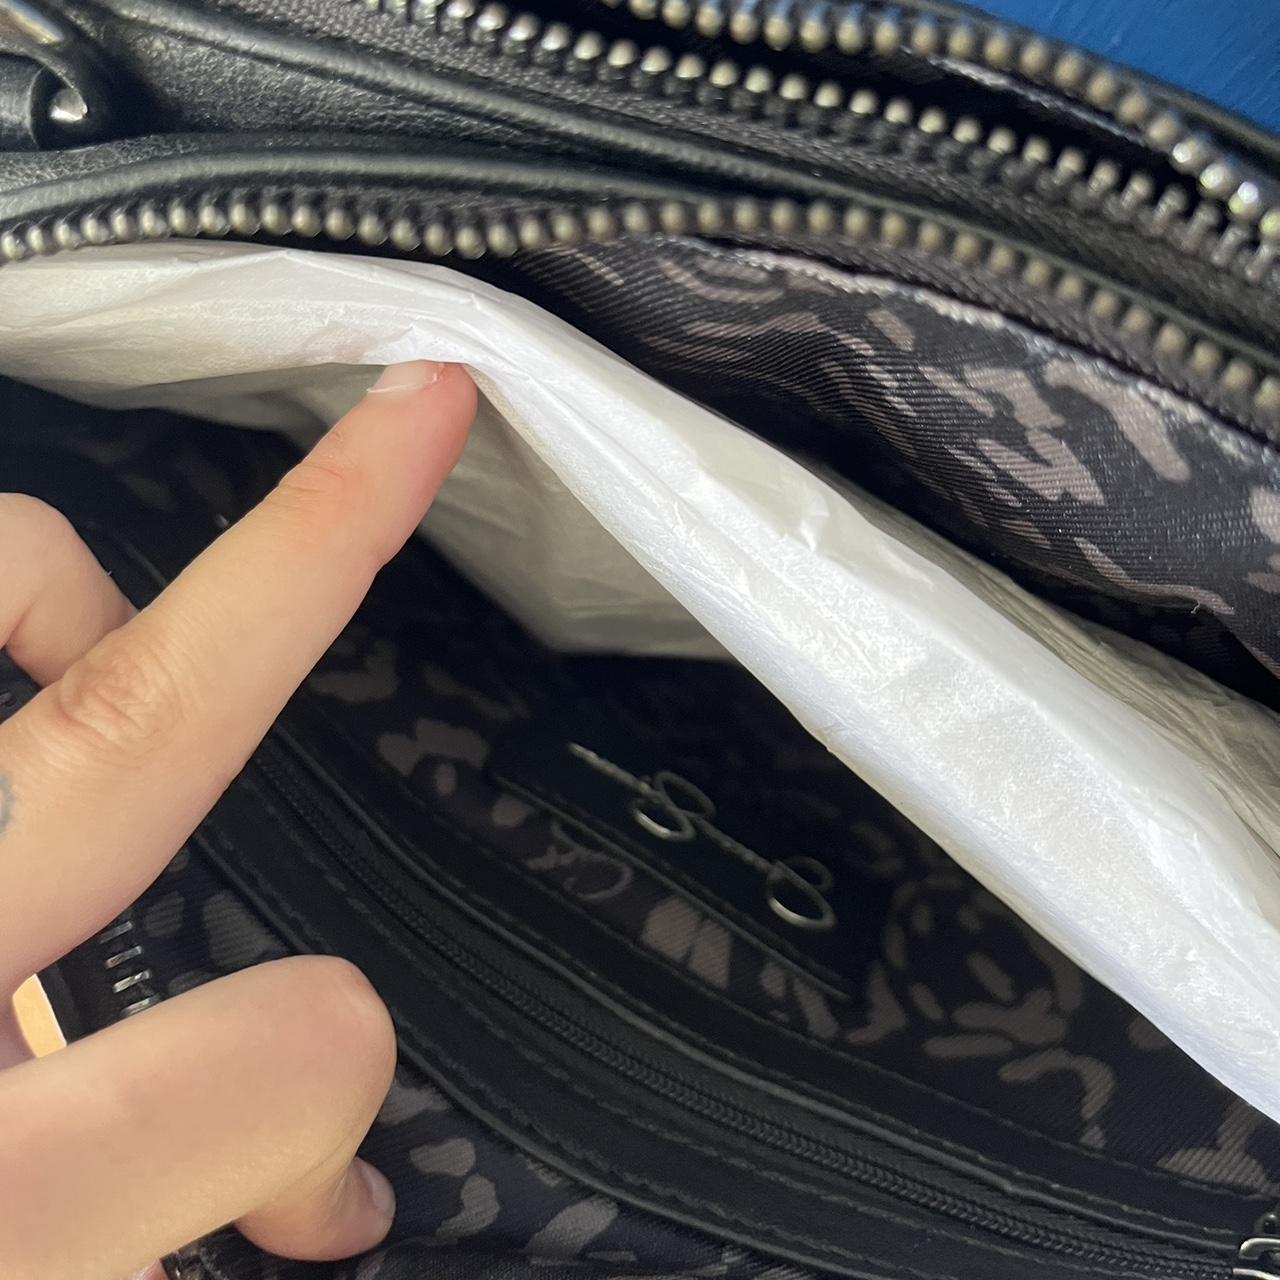 Jessica Simpson Crossbody bag ✨Never been used ✨Has - Depop